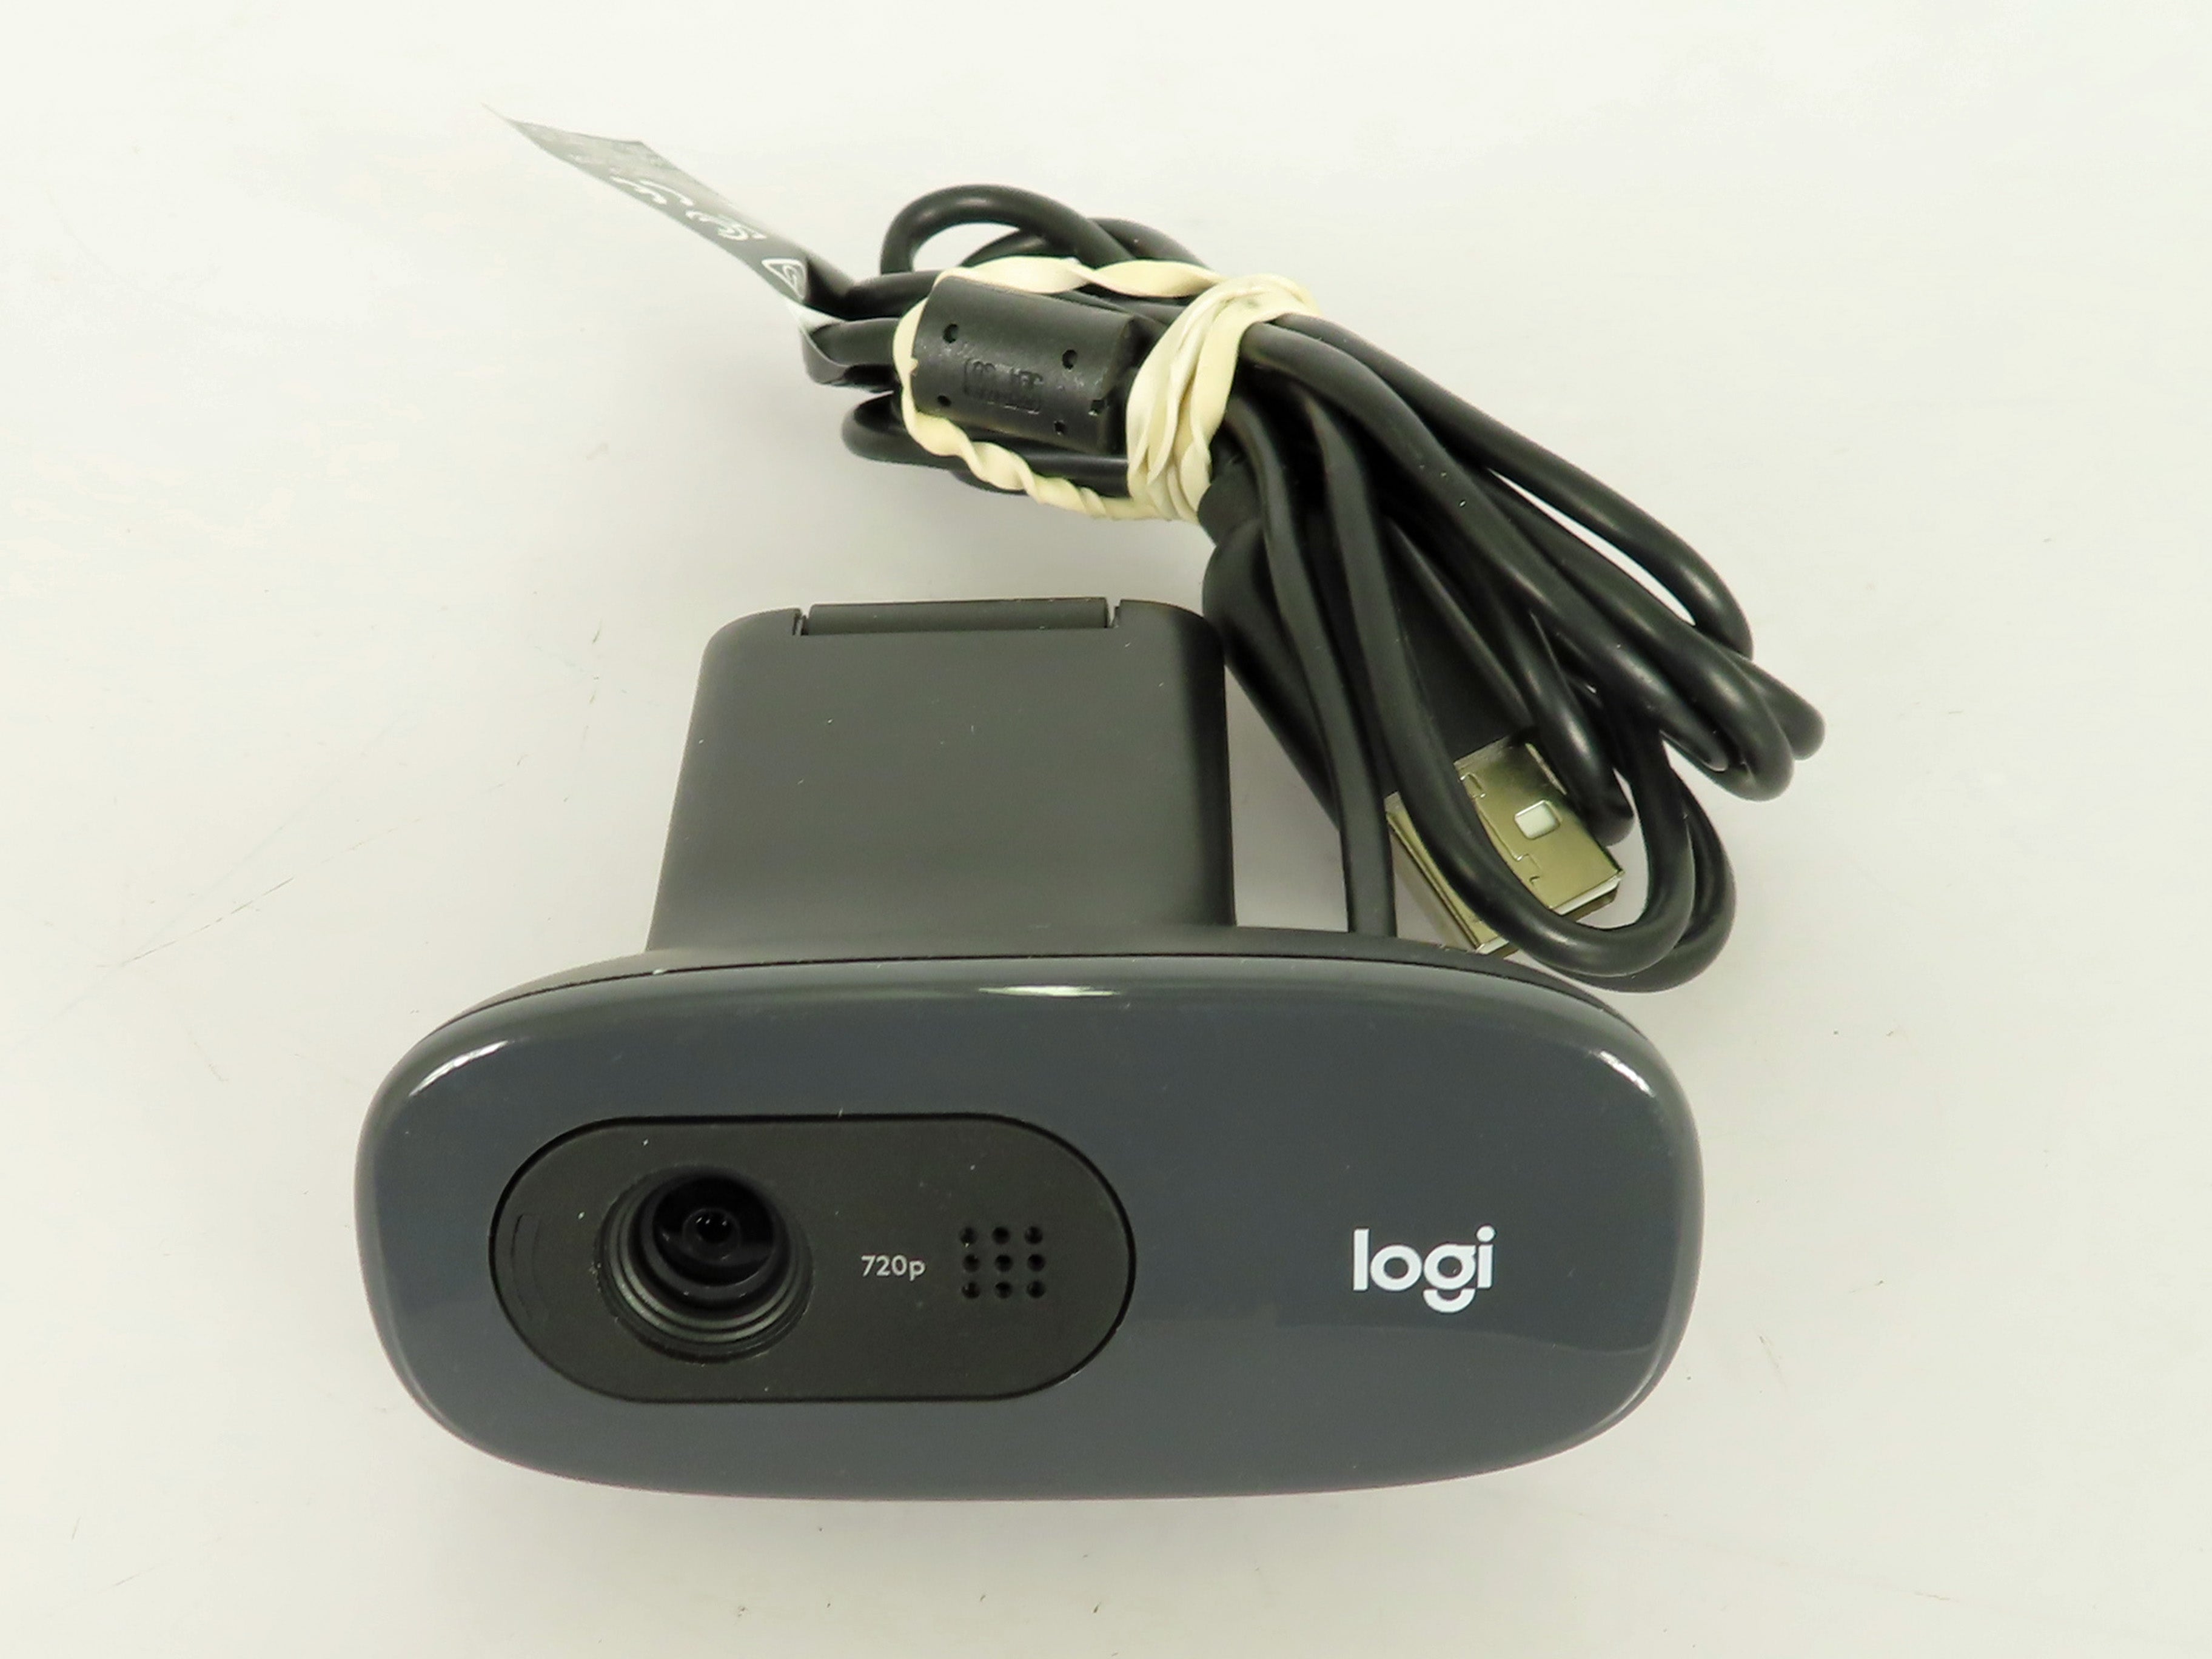 Logitech C270 HD - Webcam